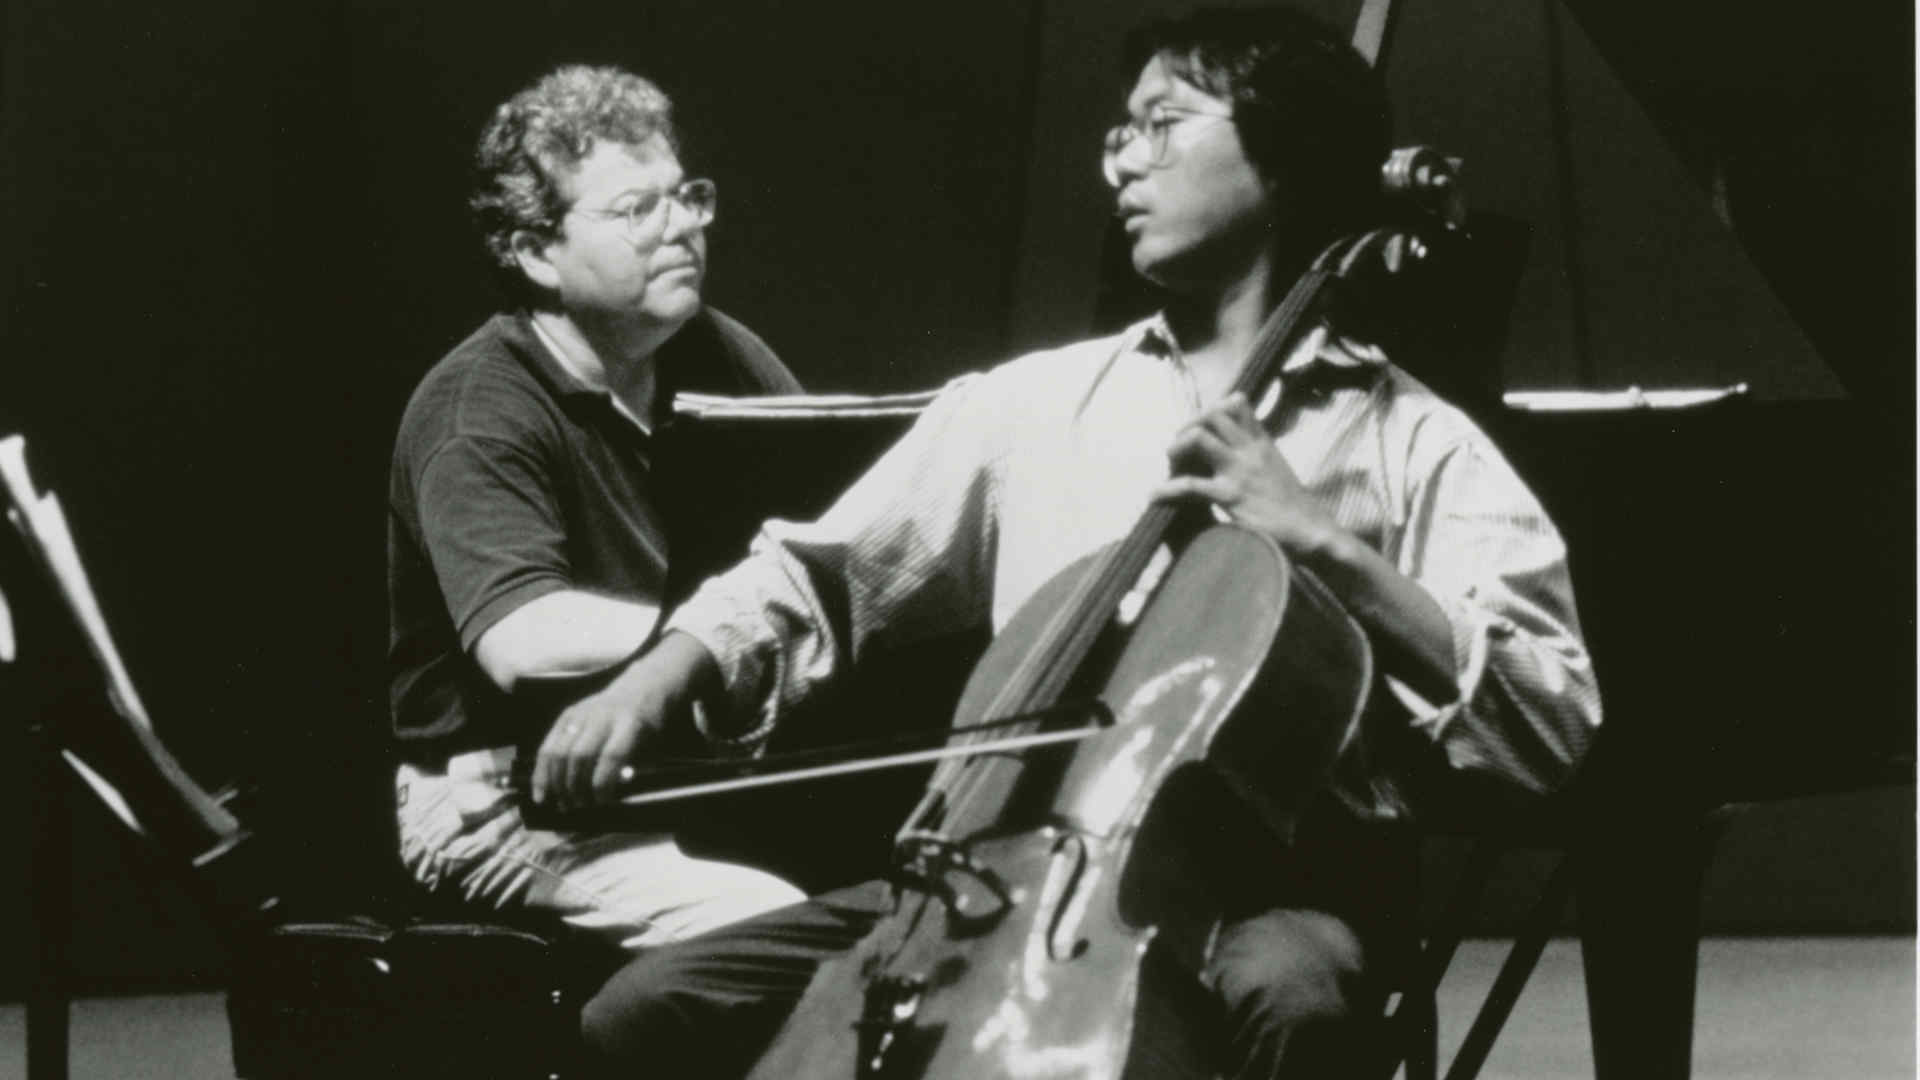 Emanuel Ax and YoYo Ma in 1996